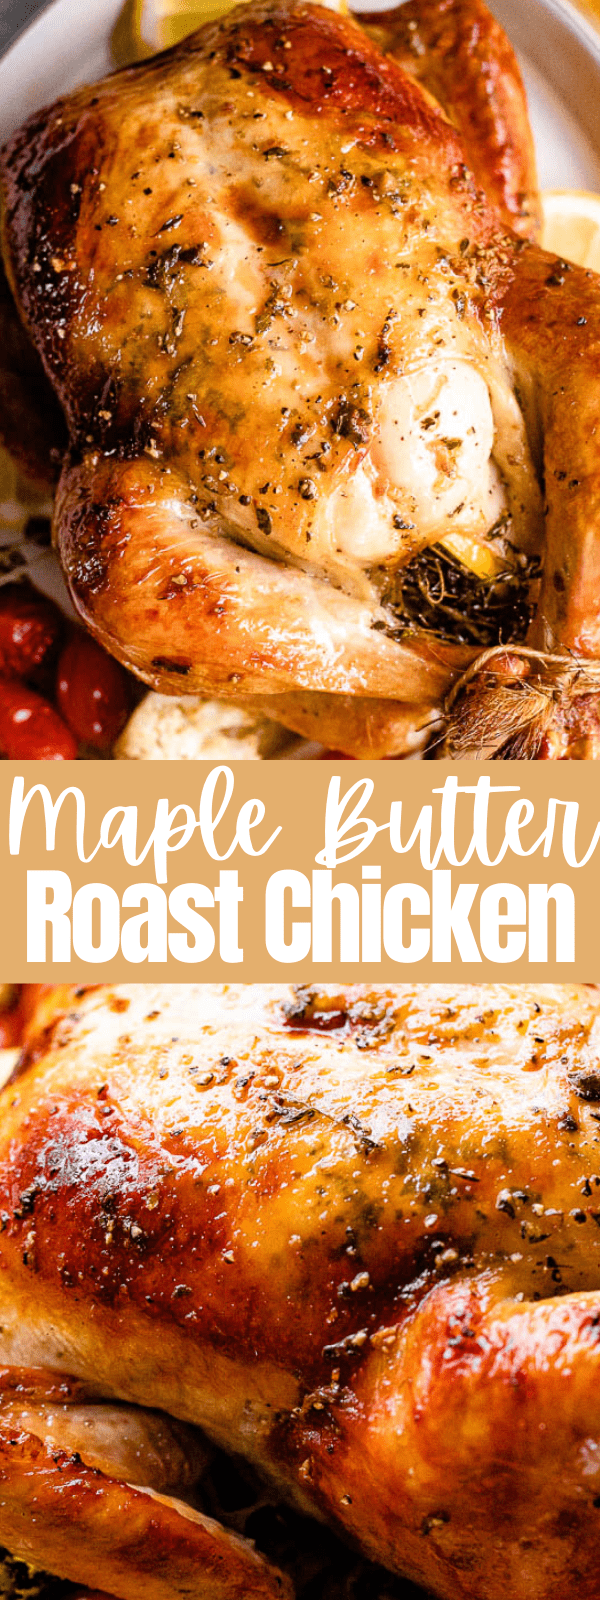 Maple Butter Roast Chicken Recipe - Easy Whole Roasted Chicken!